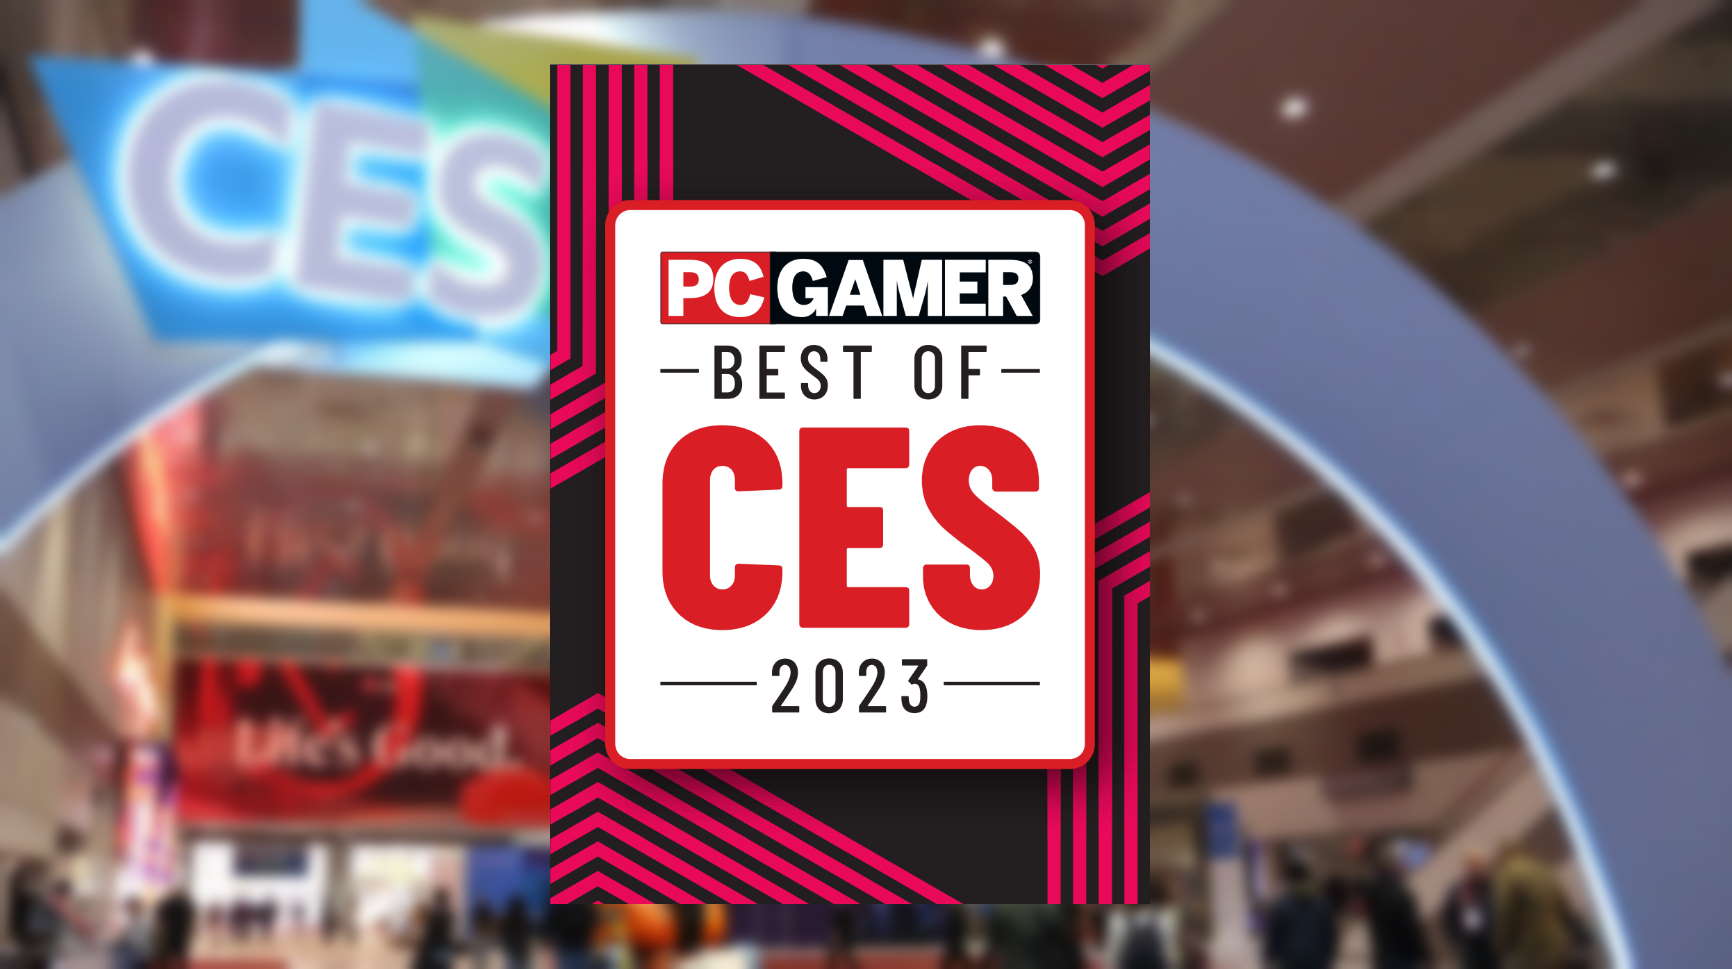  PC Gamer's Best of CES 2023 awards 